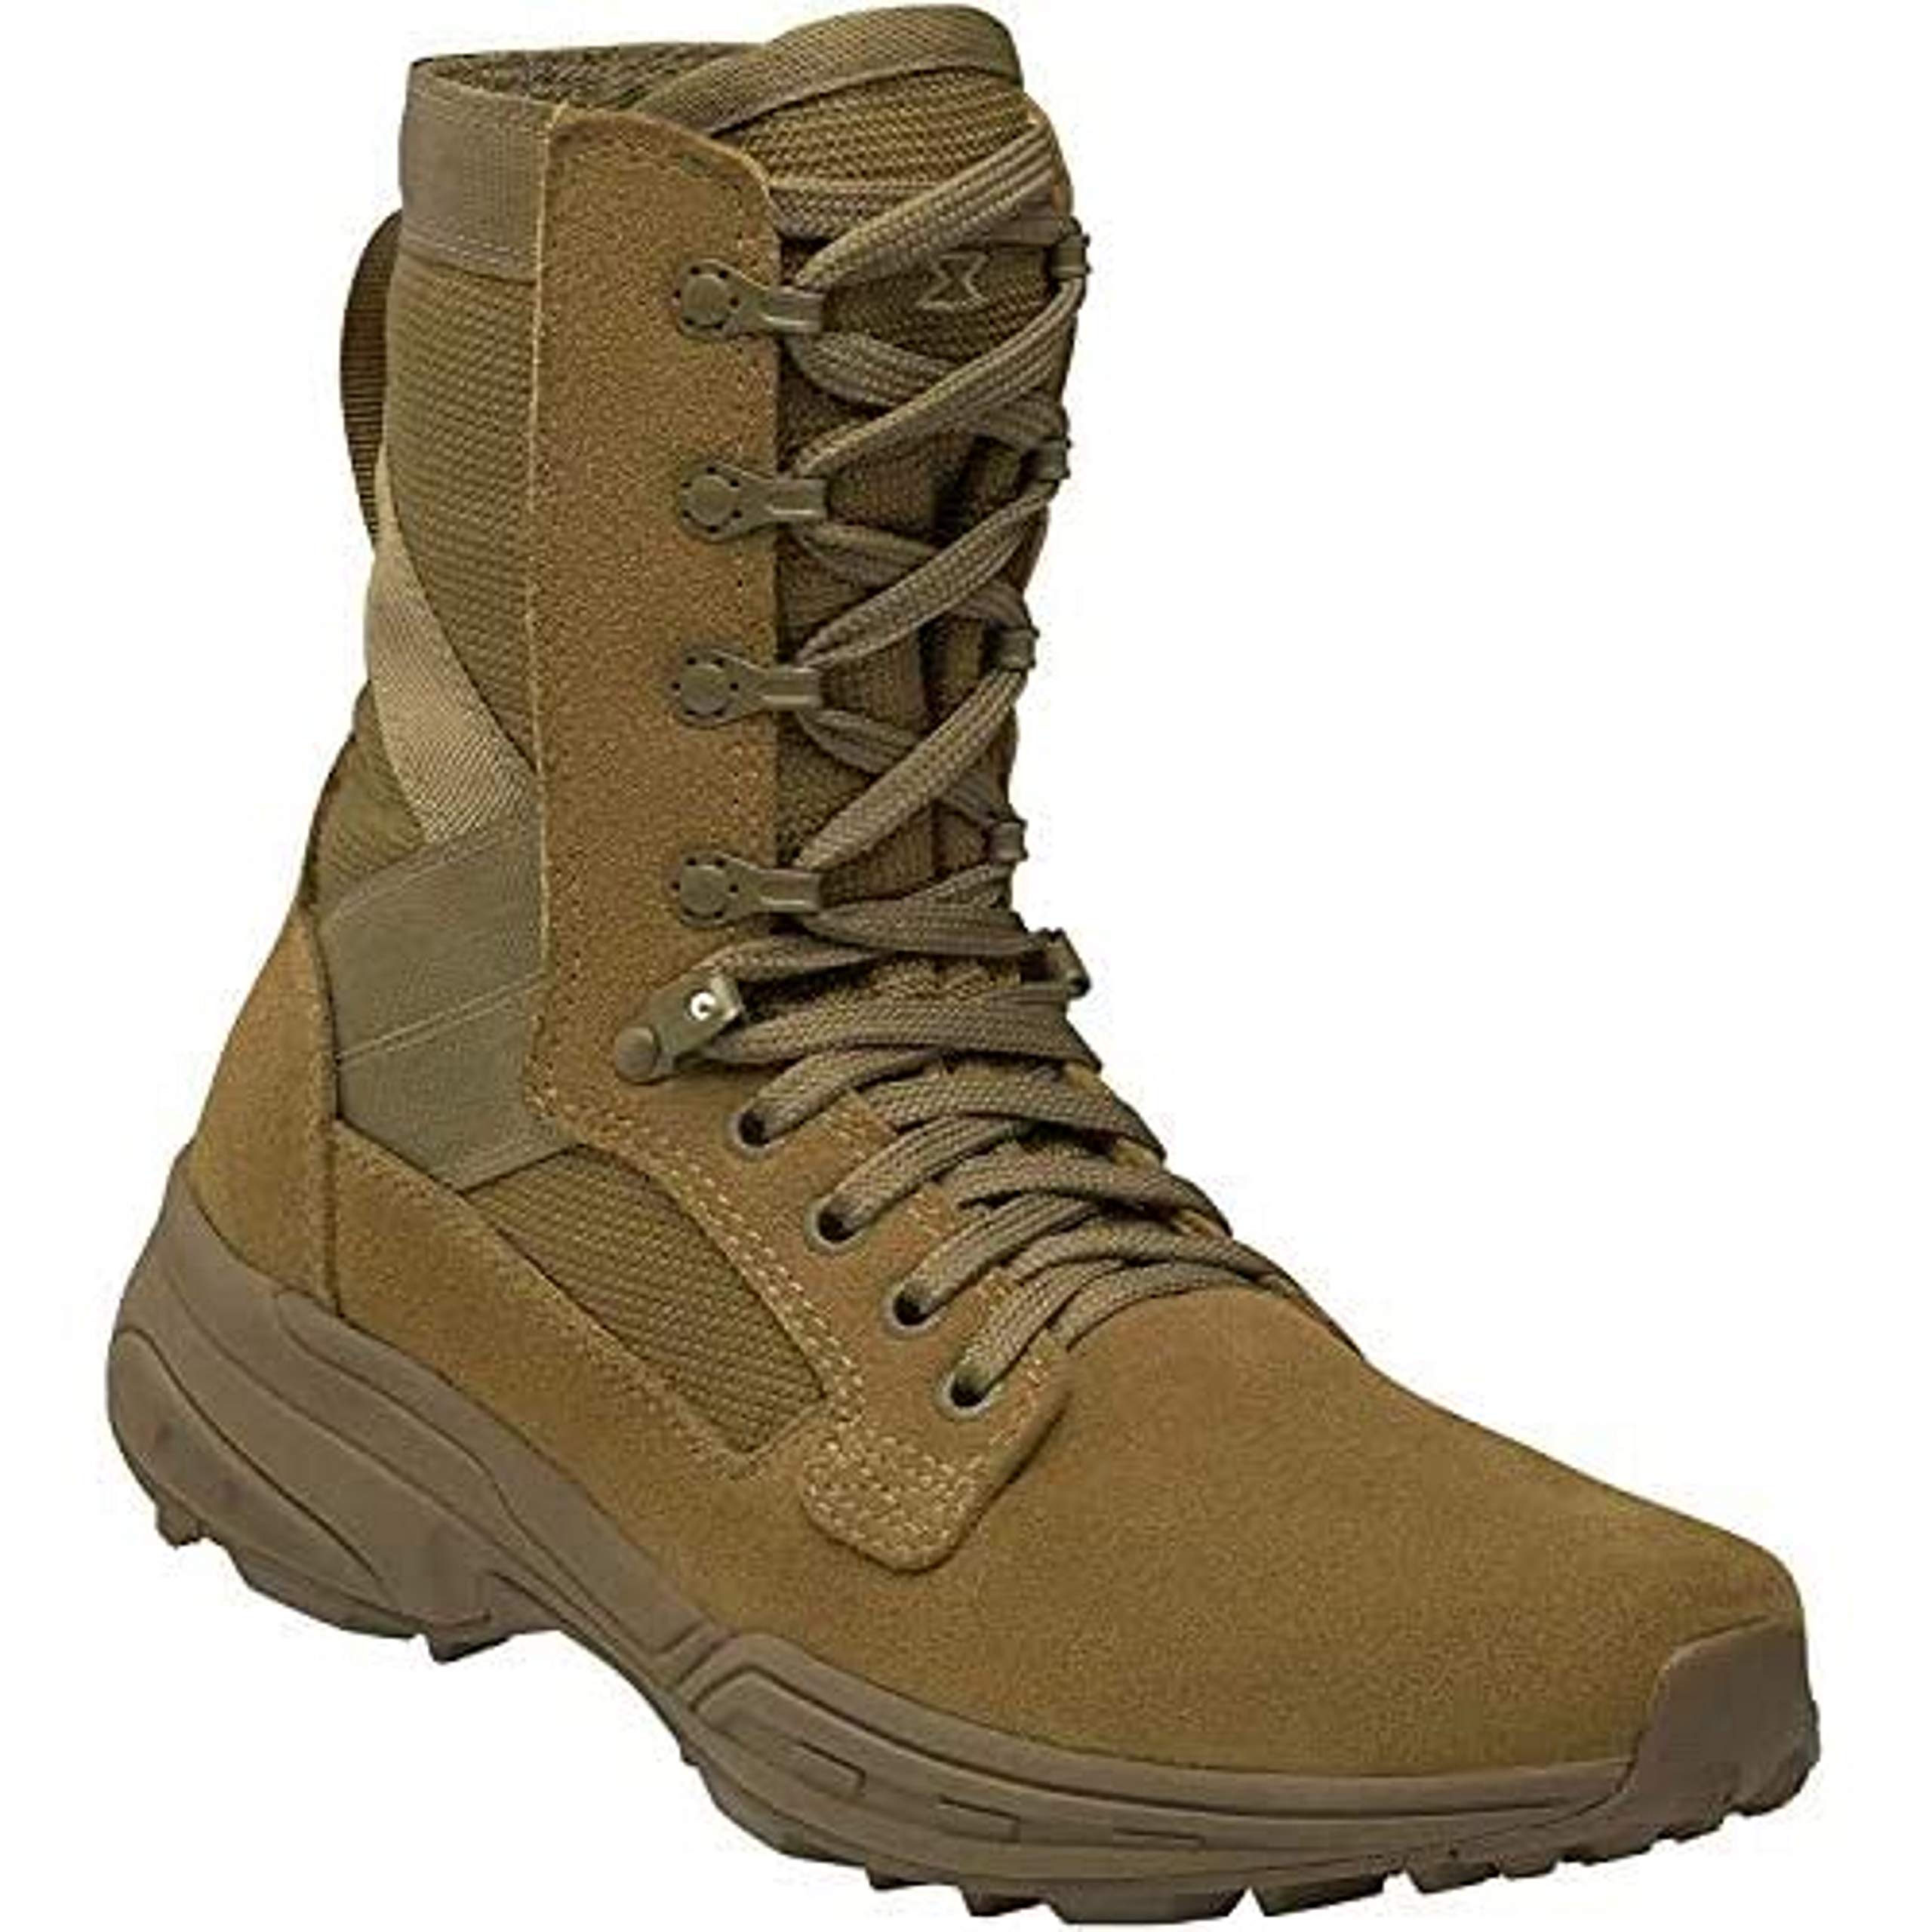 Garmont Mens Boots - Tactical 8 NFS 670 Regular - Coyote - 11